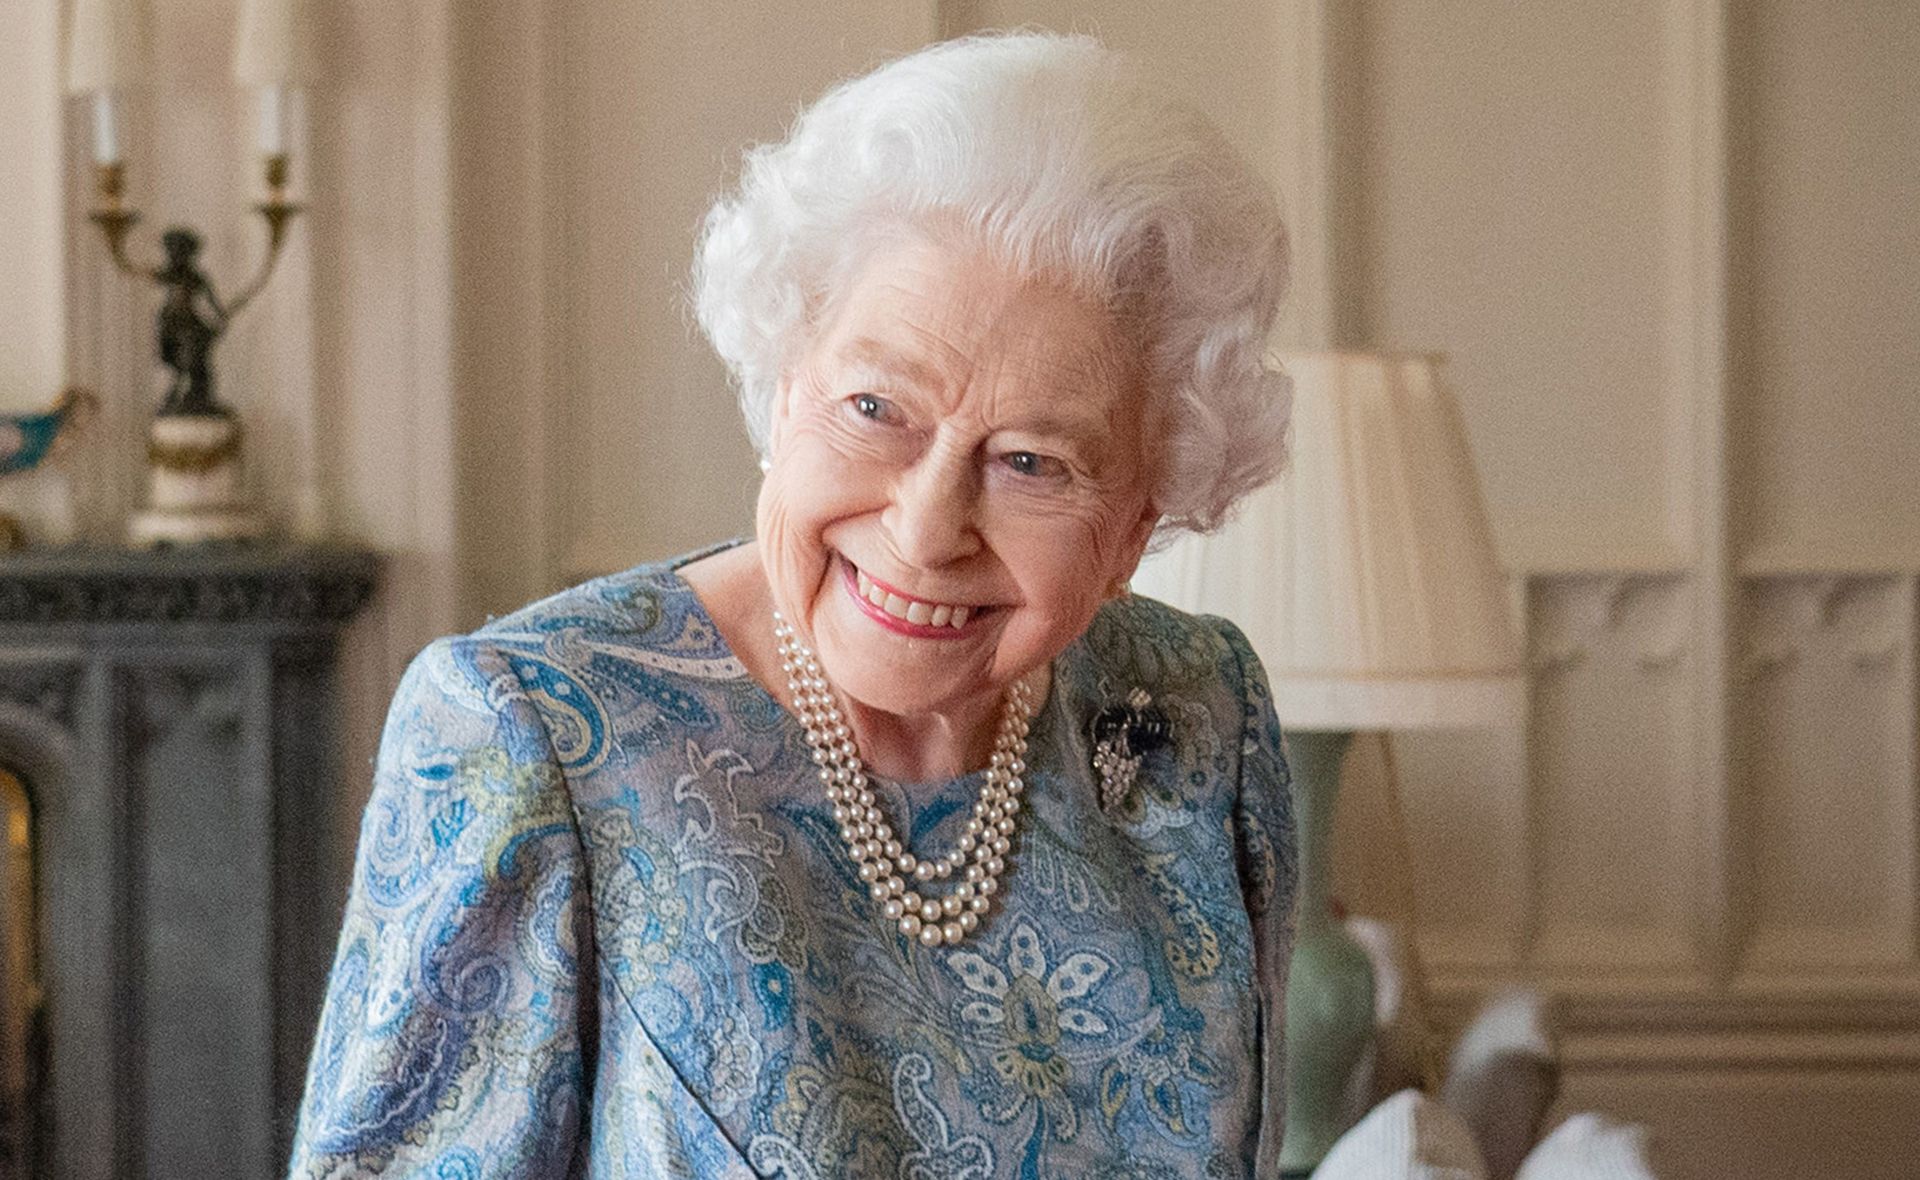 REVEALED: The last photo ever taken of Queen Elizabeth II